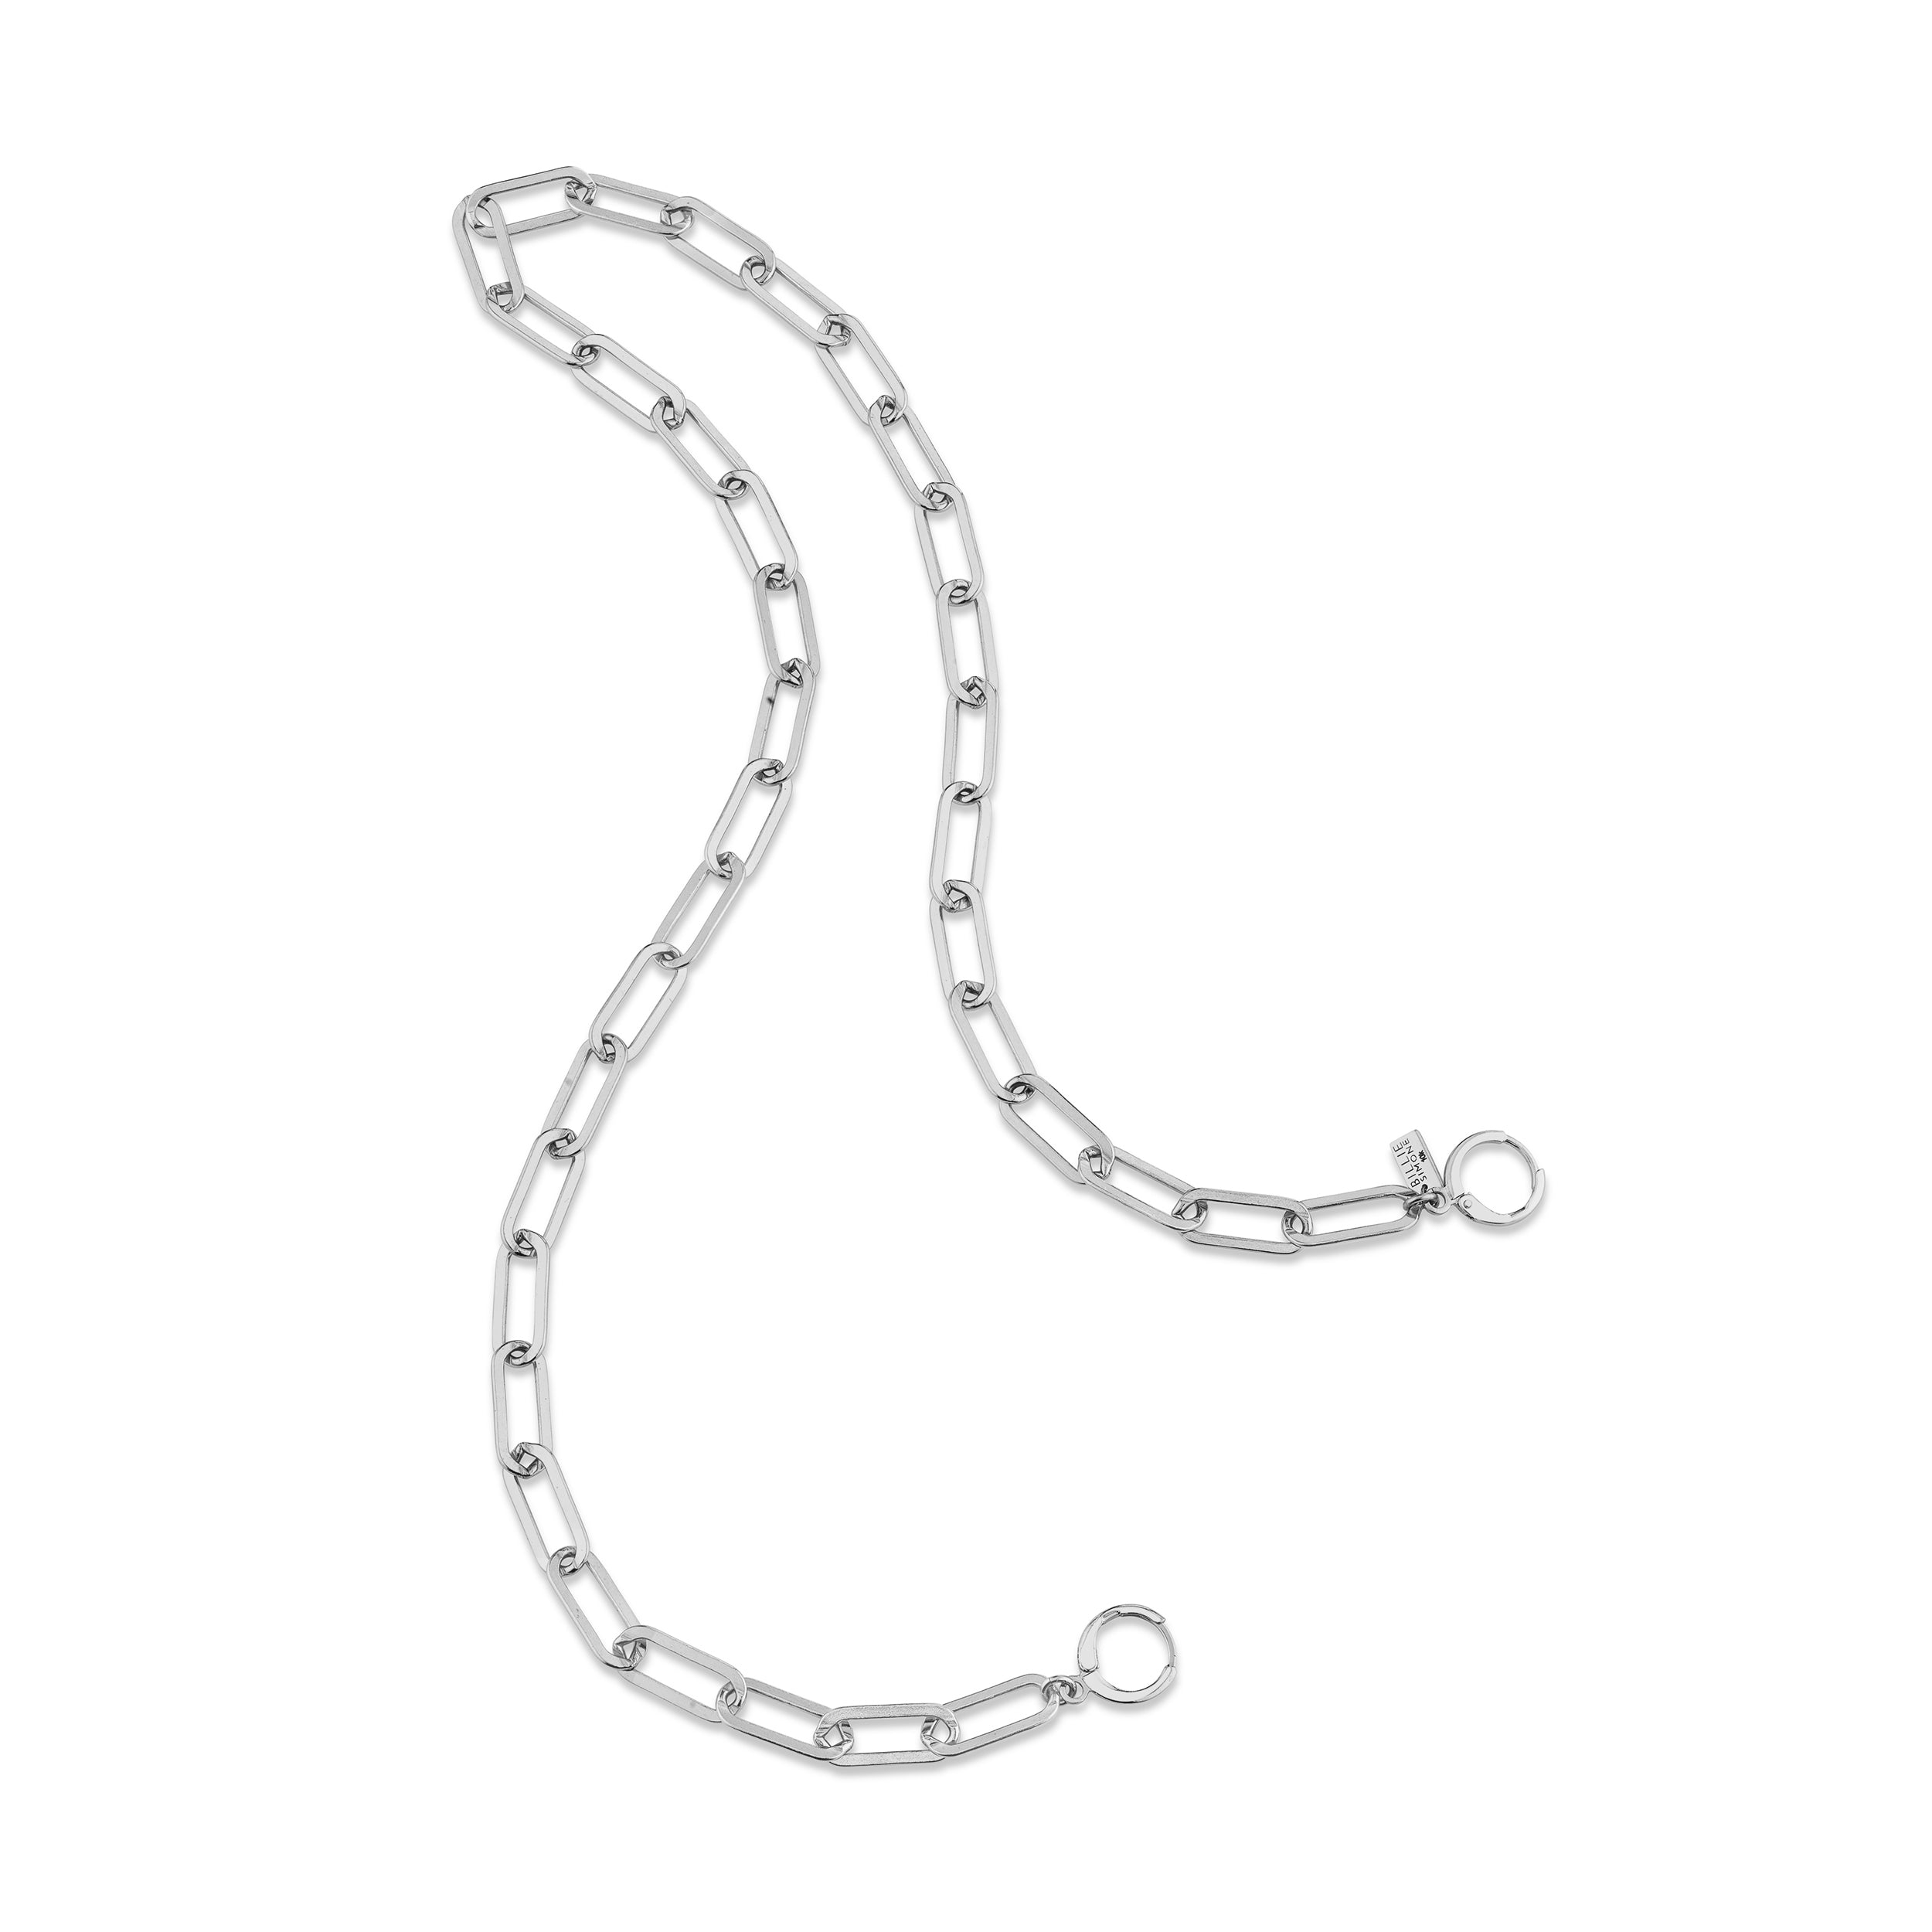 Gemini Mask Chain - Large Link